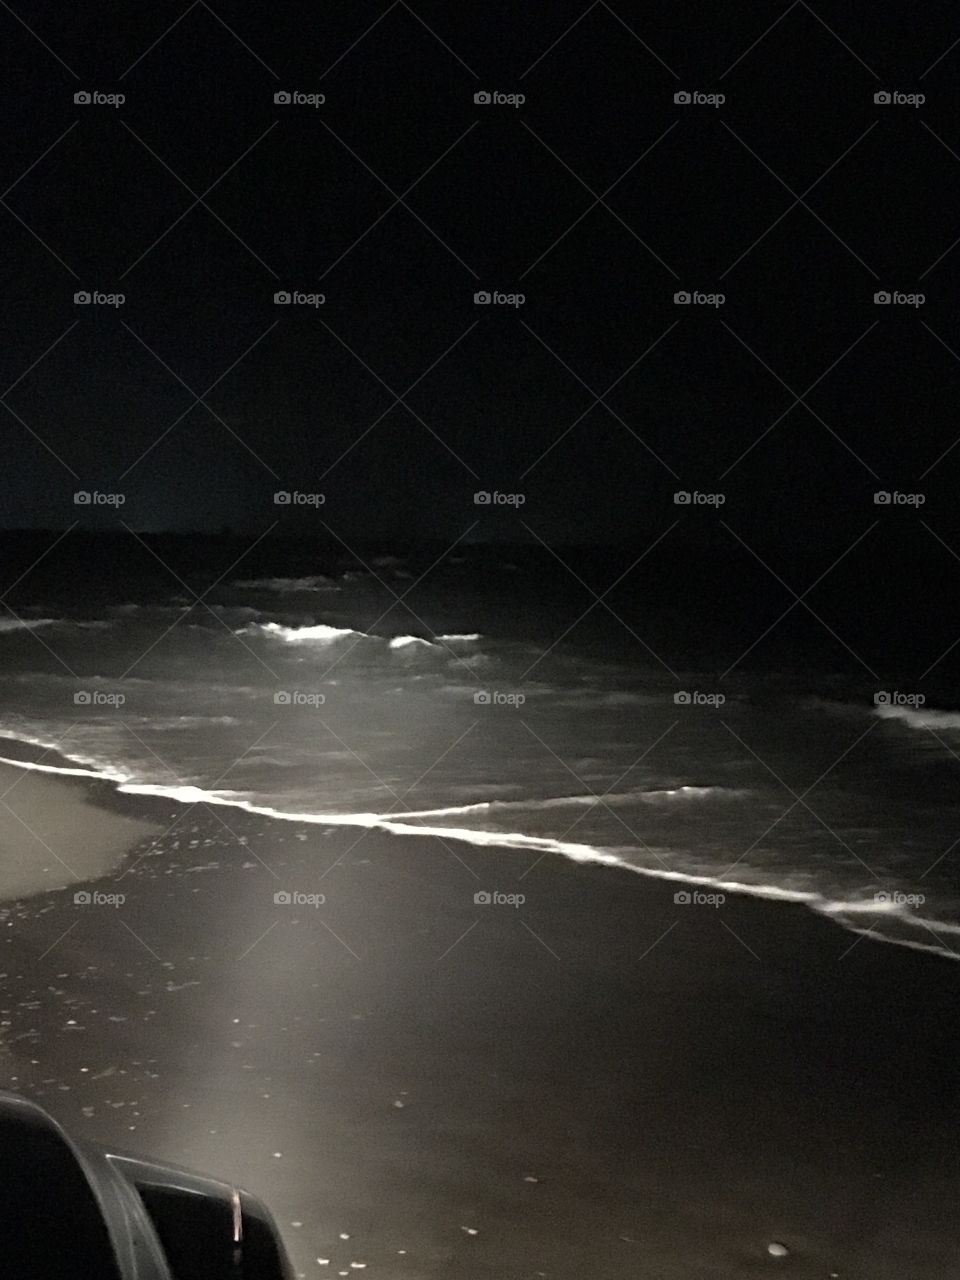 Low tide at the ocean at night